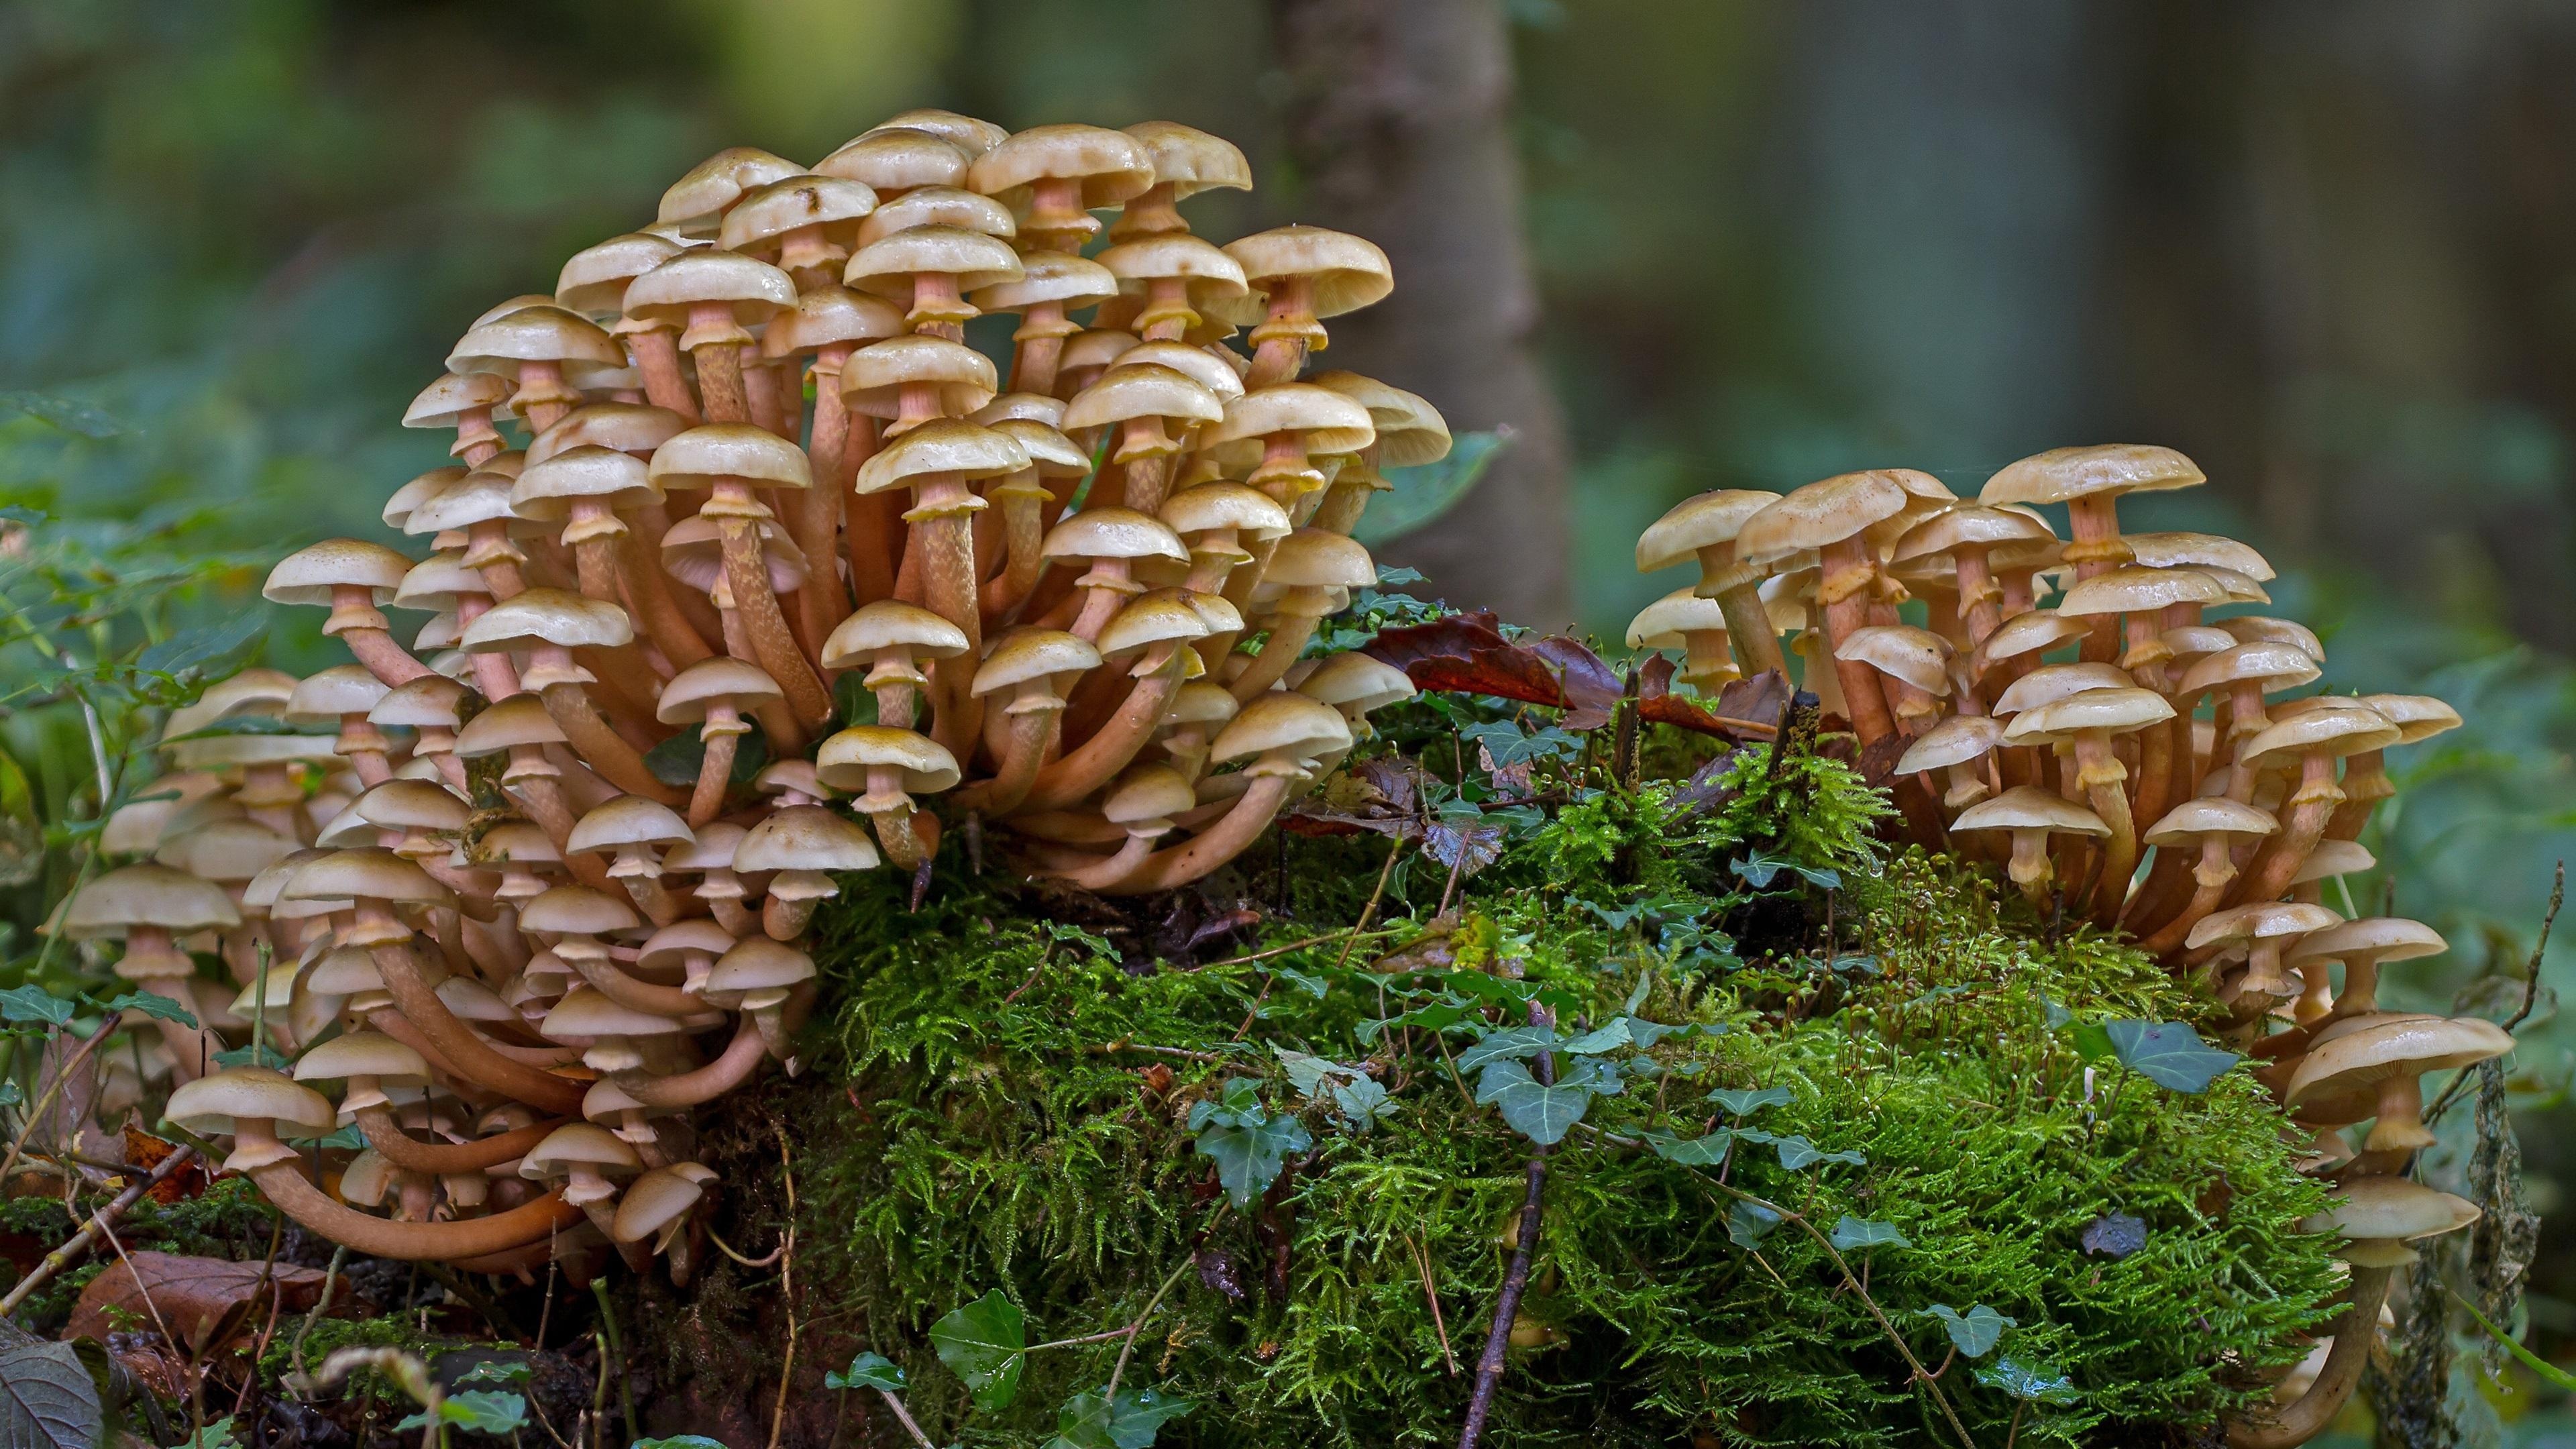 Forest mushrooms, Mossy wonderland, Fungi in nature, Mushrooms in moss, 3840x2160 4K Desktop